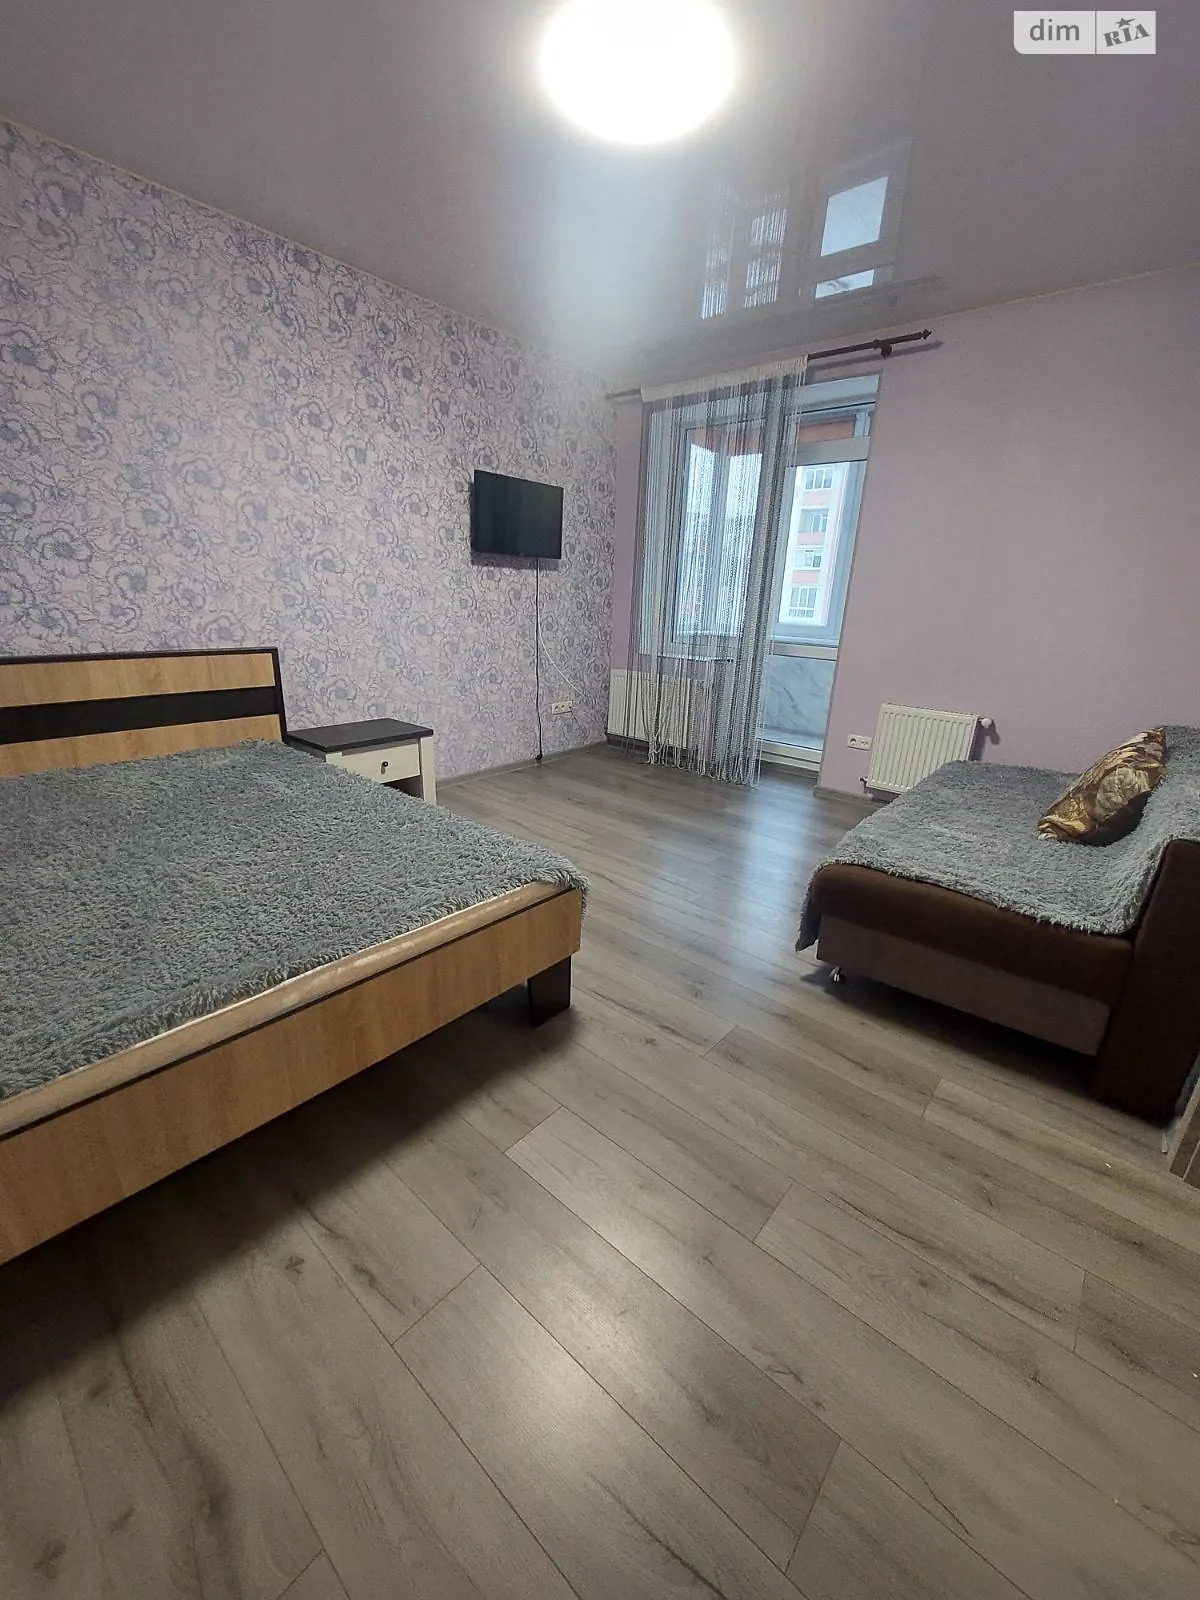 1-кімнатна квартира 43 кв. м у Луцьку, цена: 11000 грн